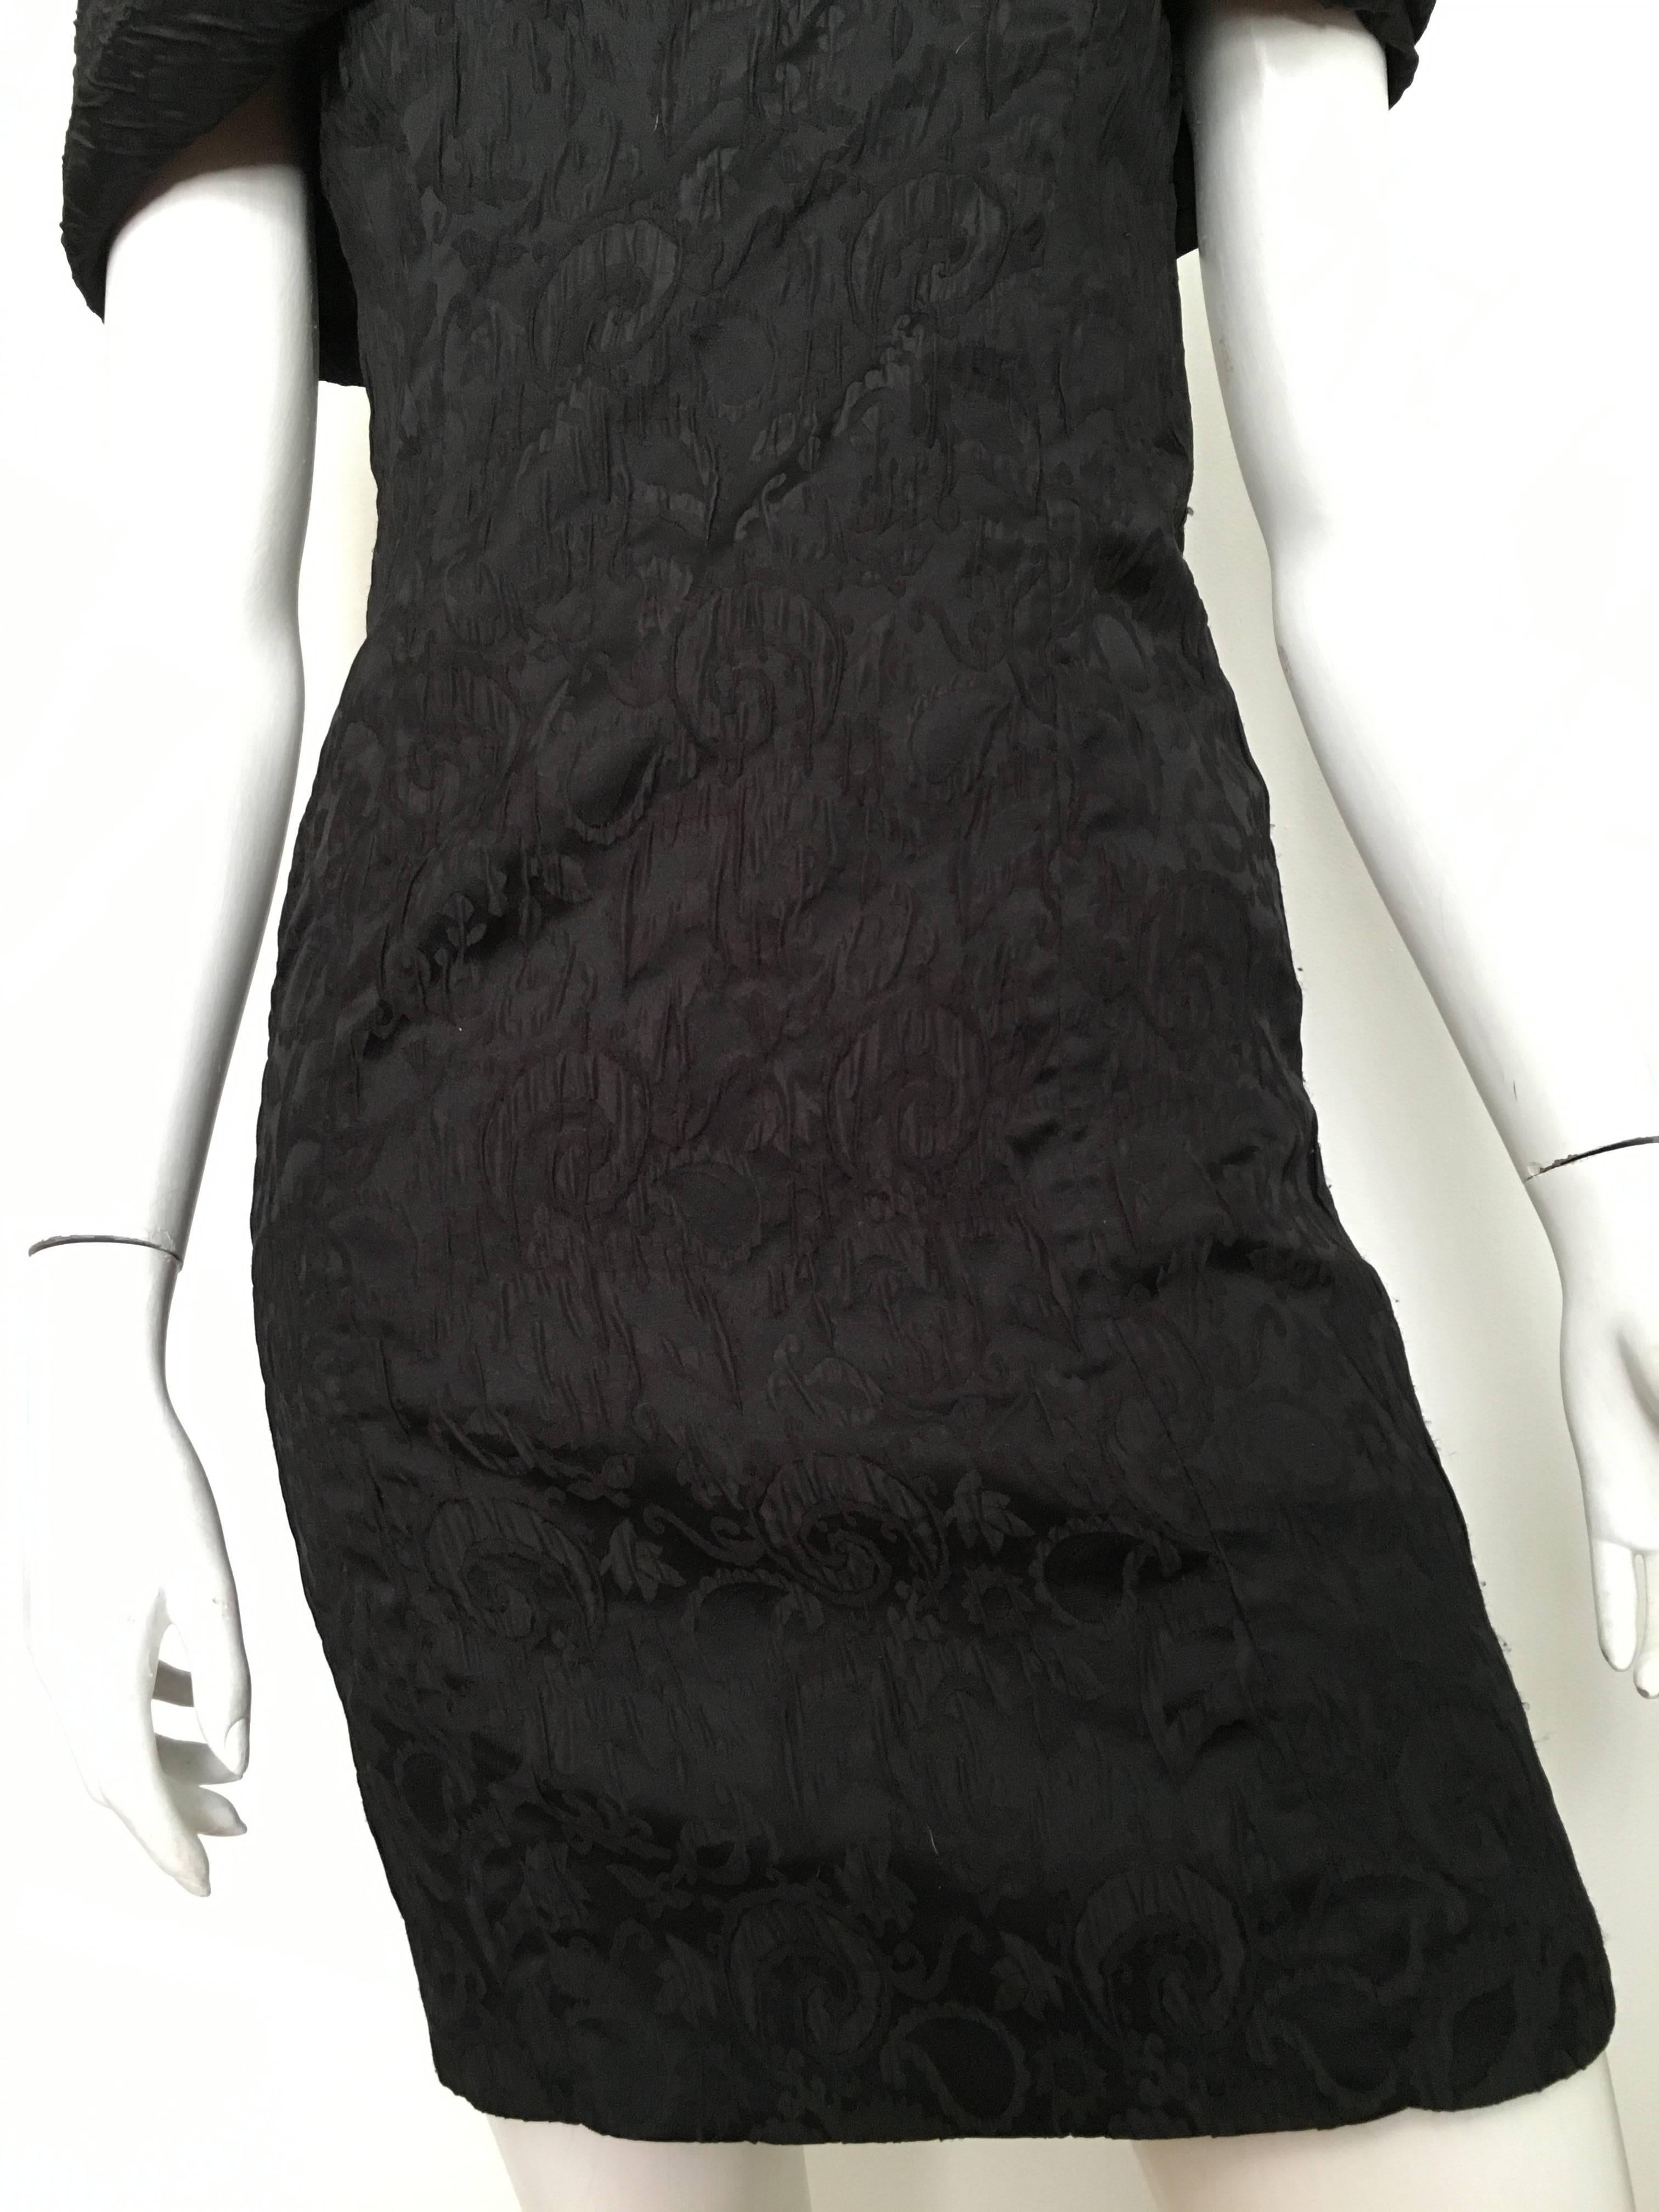 Dior 1980s Black Silk Evening Dress Size 6. In Excellent Condition For Sale In Atlanta, GA